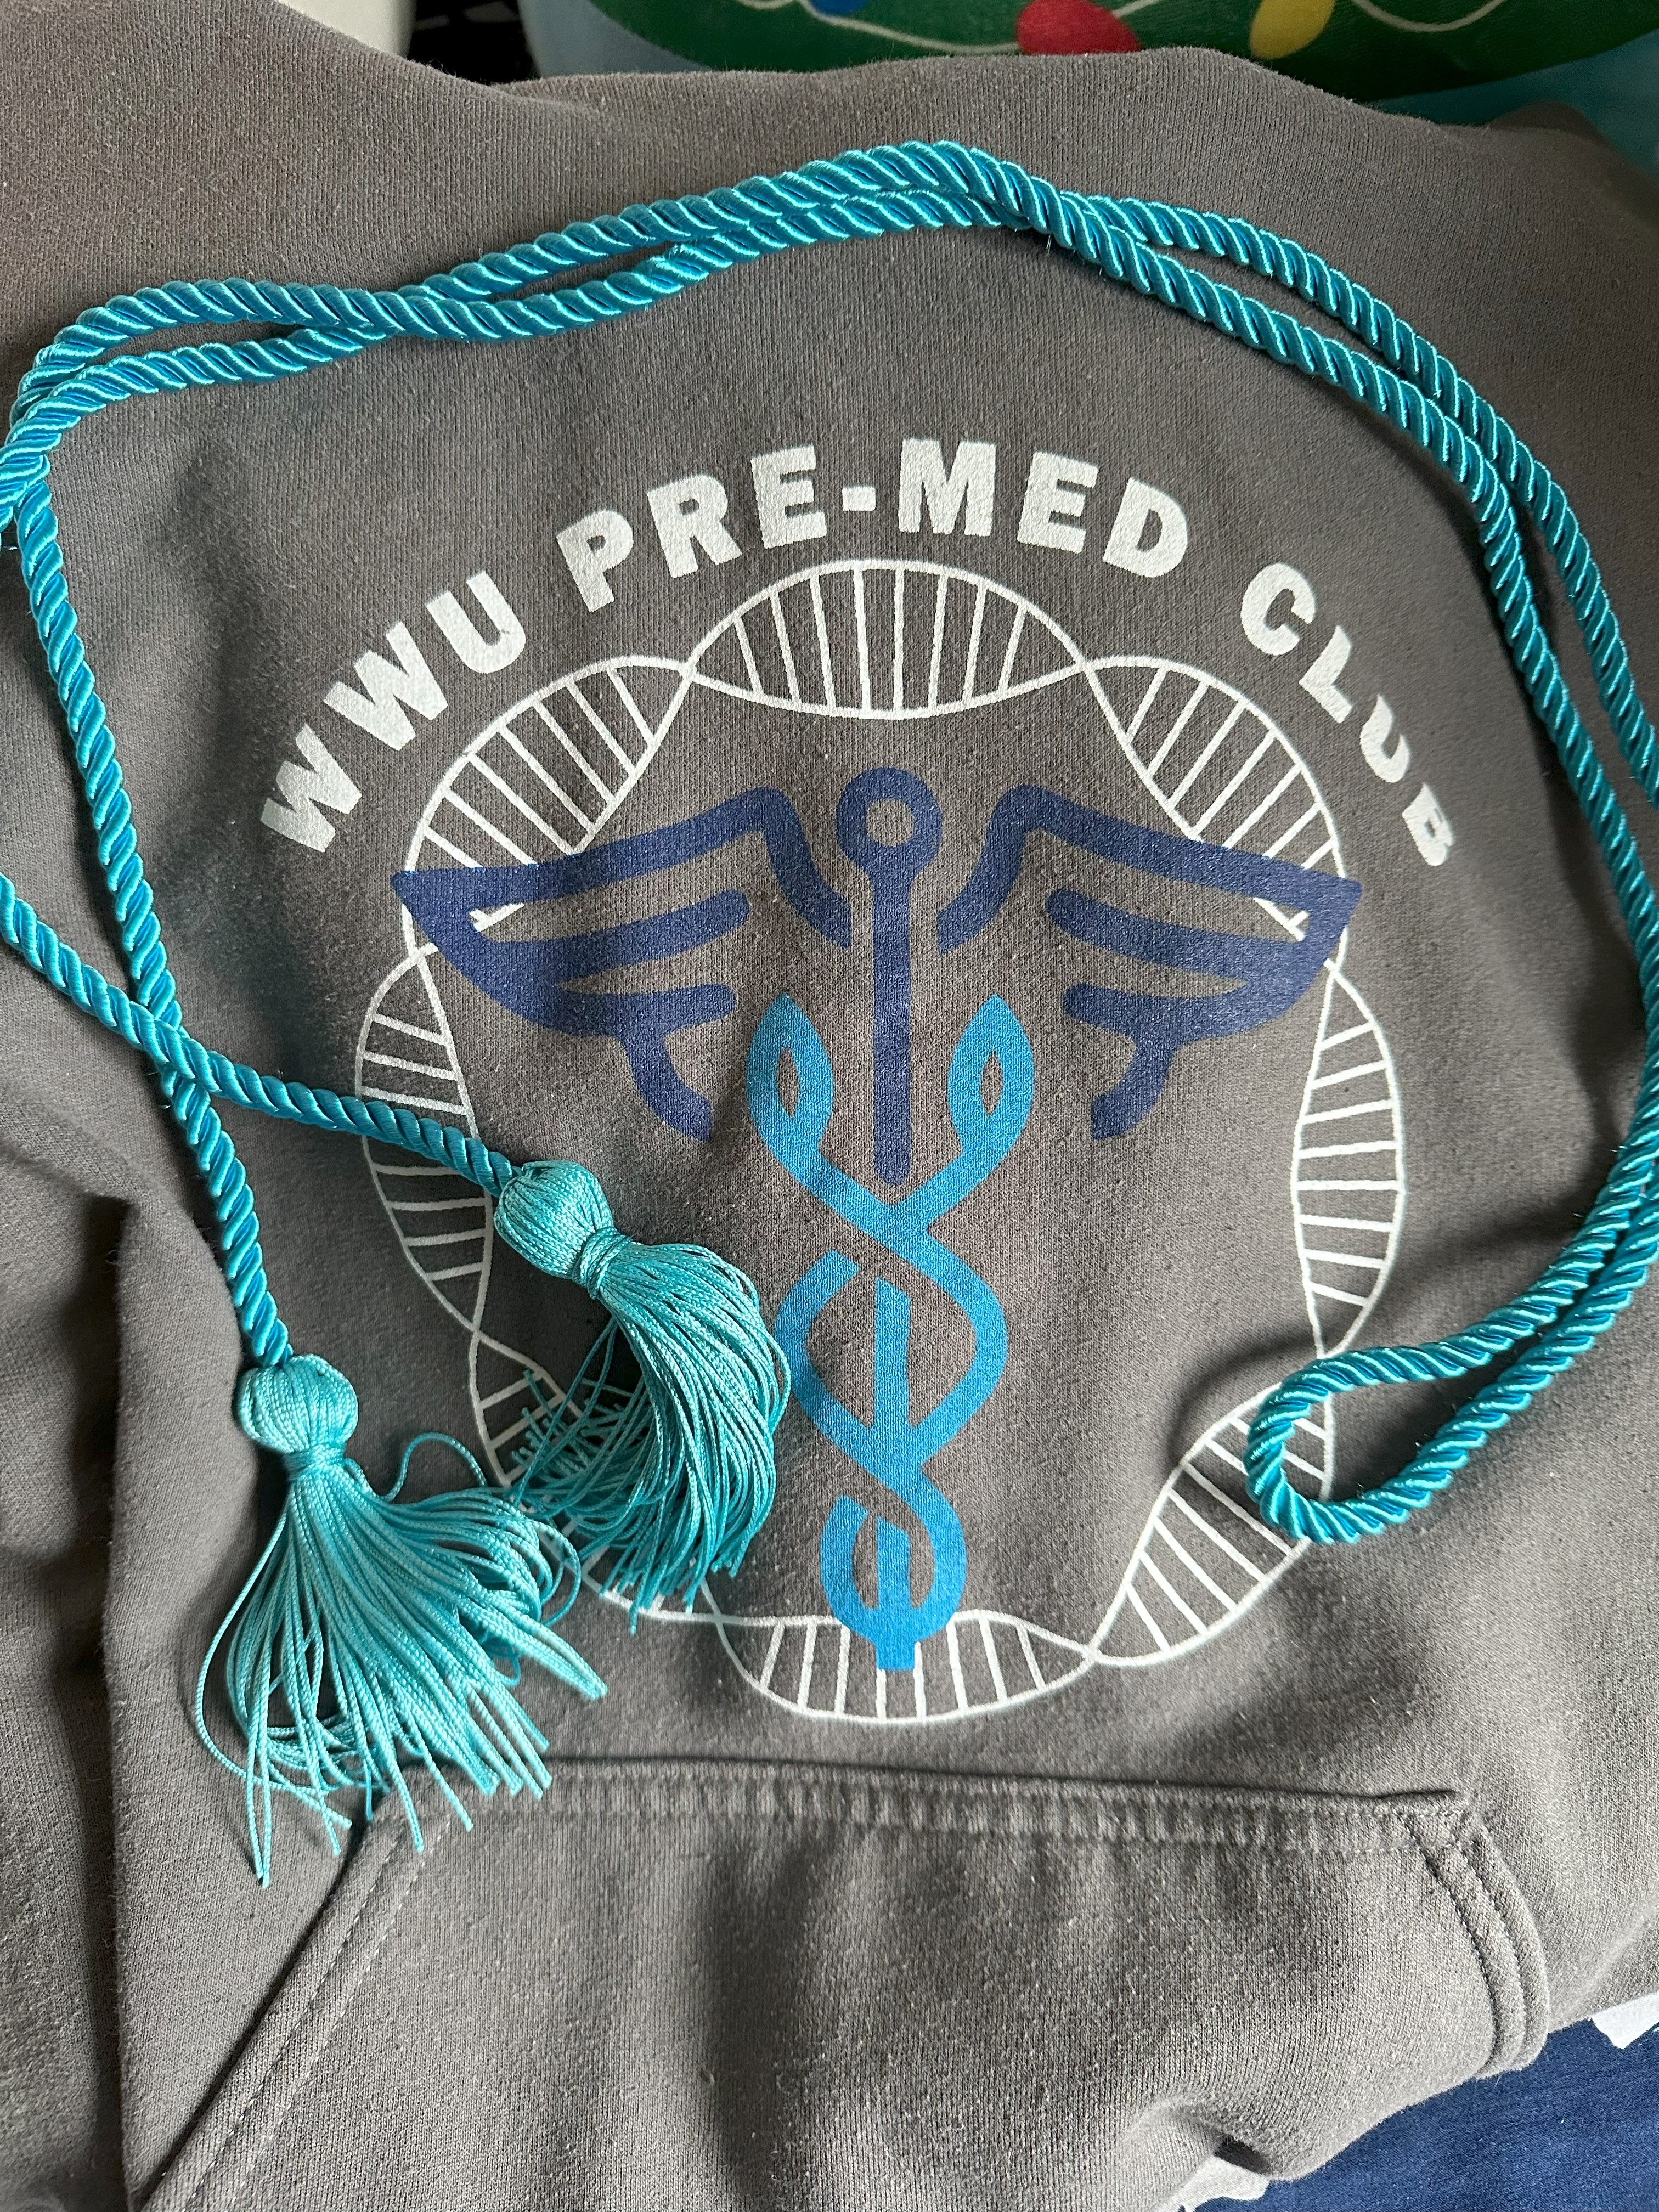 Teal blue cord and WWU Pre-Med Club sweatshirt